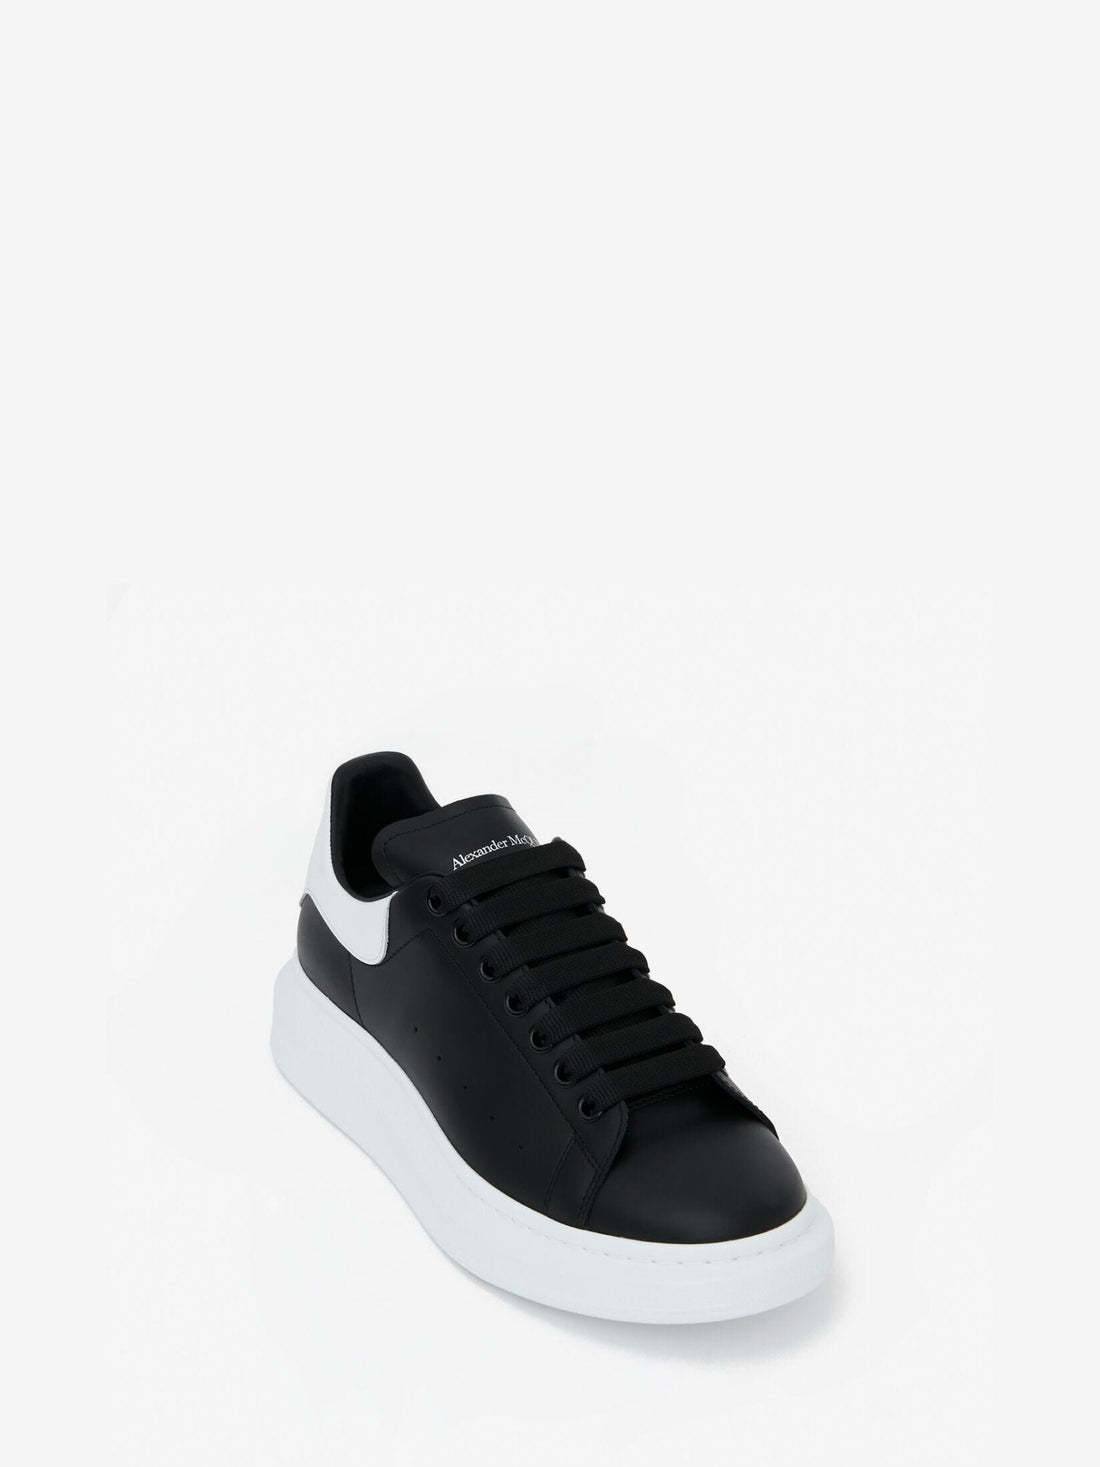 Alexander McQueen Oversized Sneaker in Black/White - VIARESELL